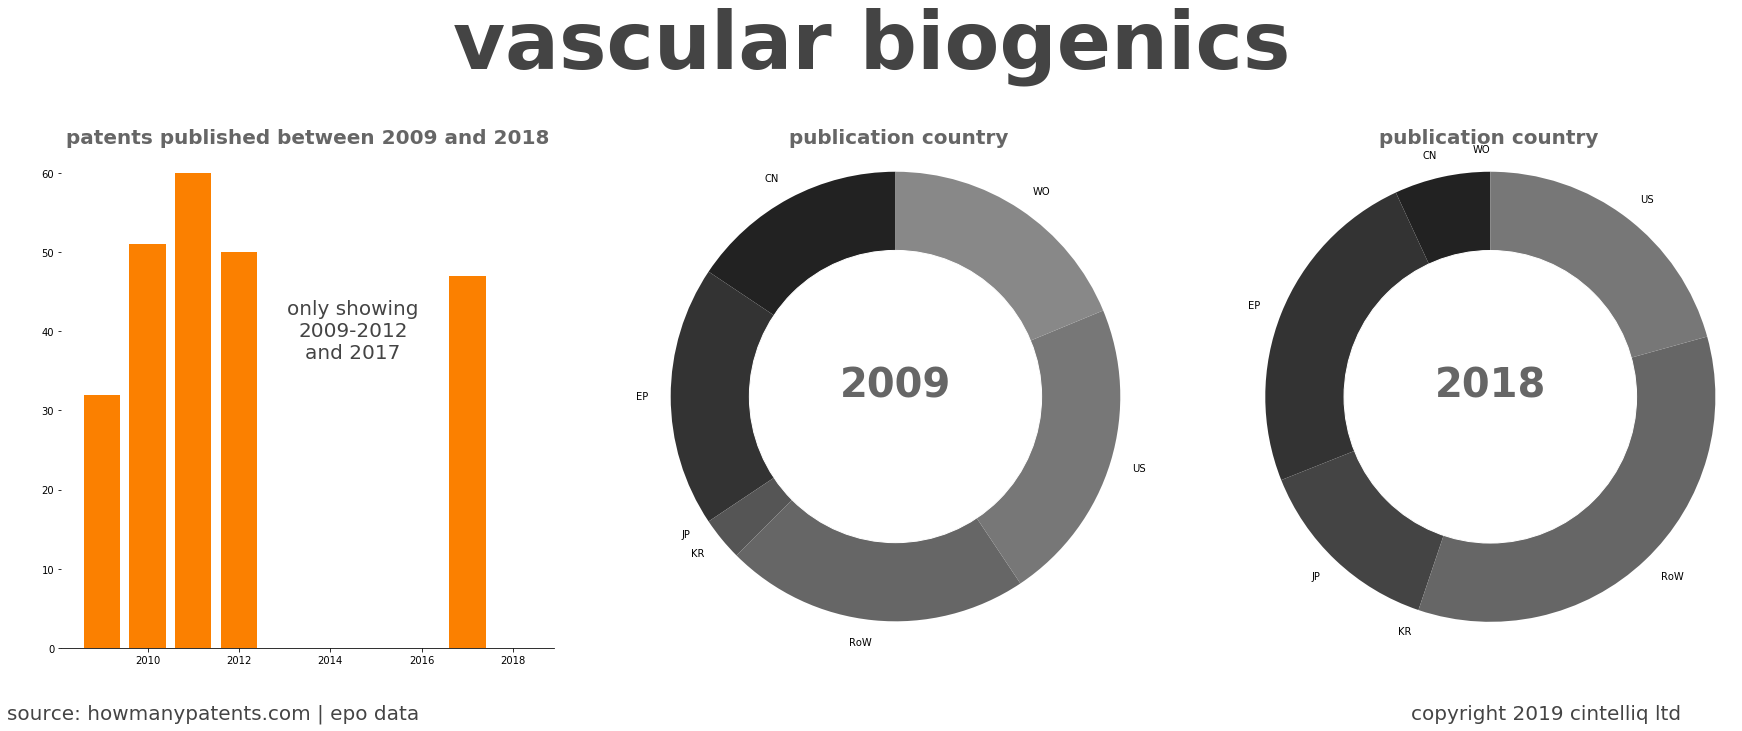 summary of patents for Vascular Biogenics